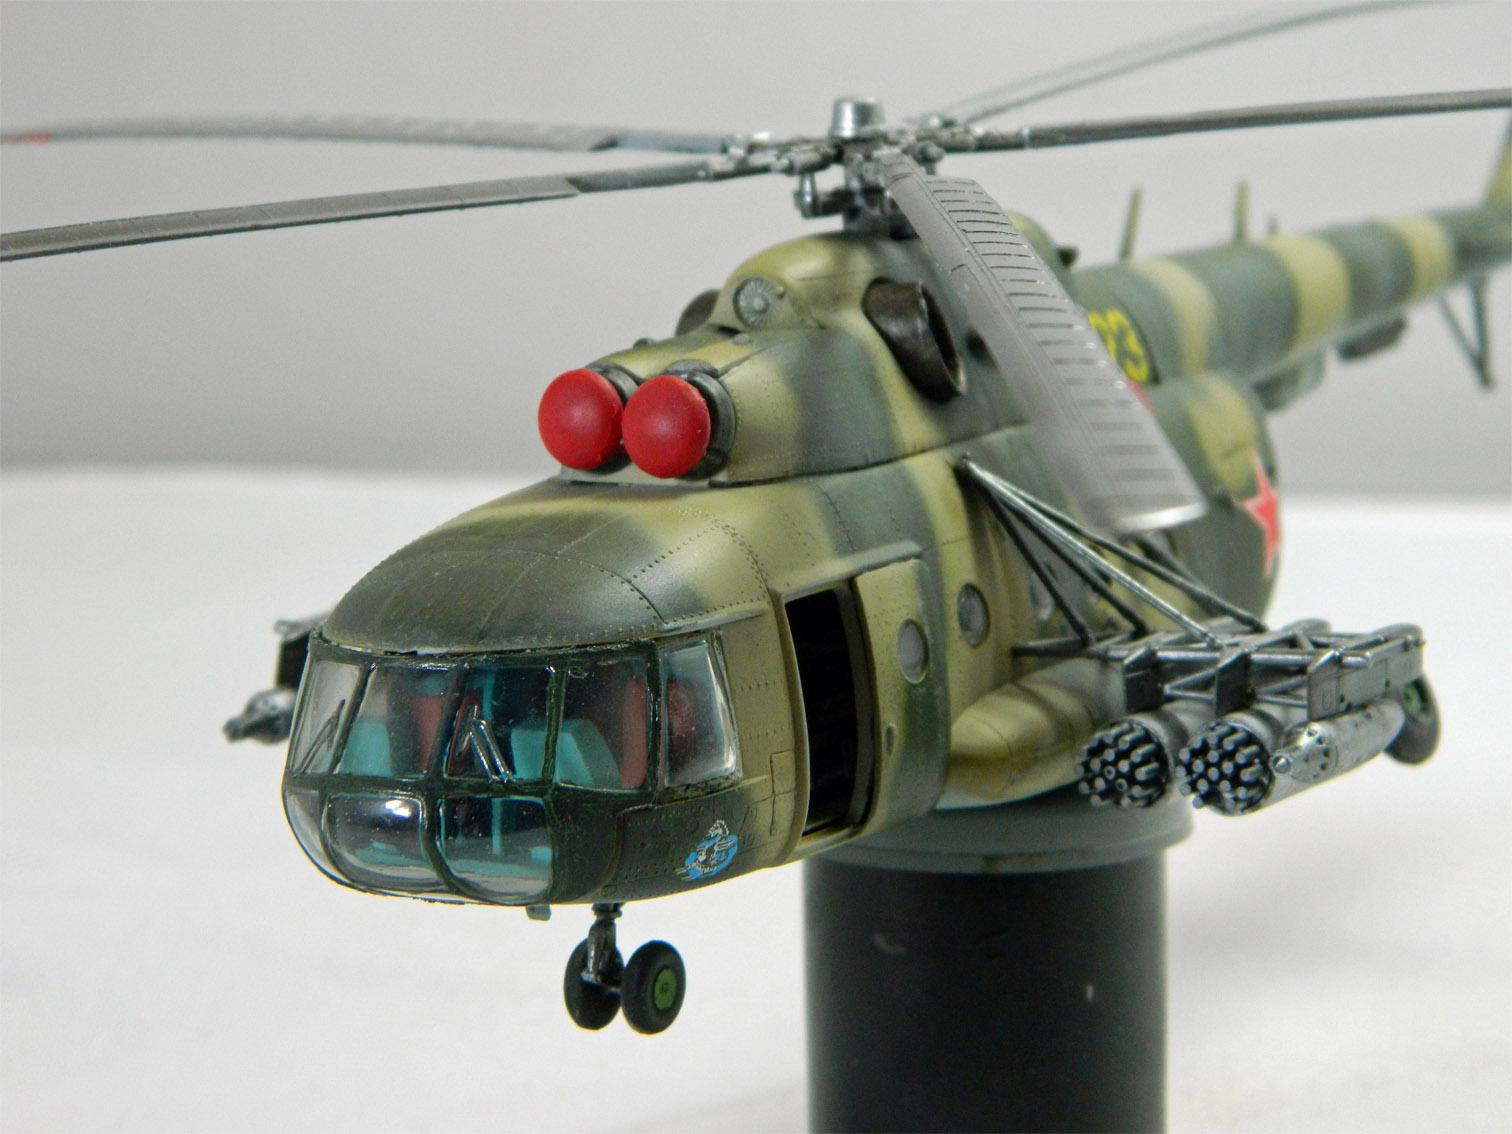 MI-8 Assault Helicopter (Zvezda 1/72)
